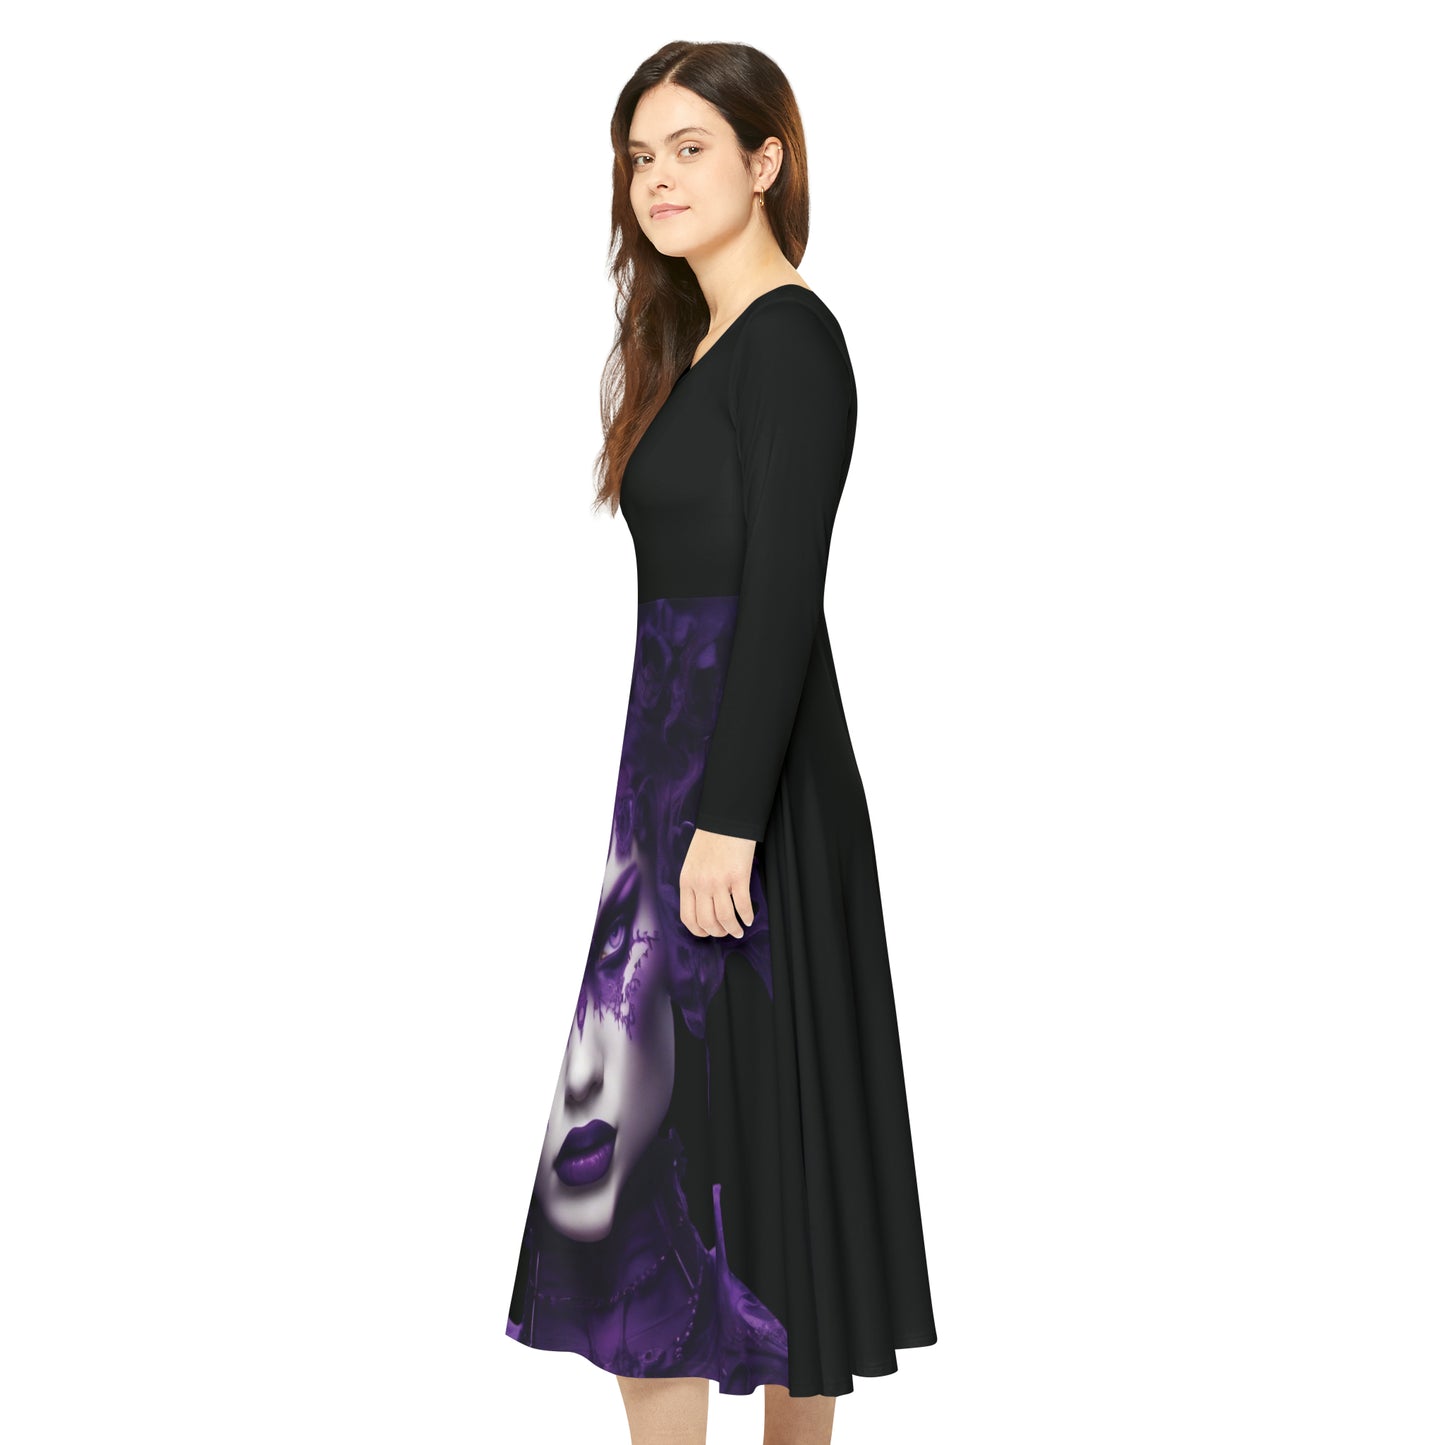 Purple Suxxubus Women's Long Sleeve Dance Dress (AOP)